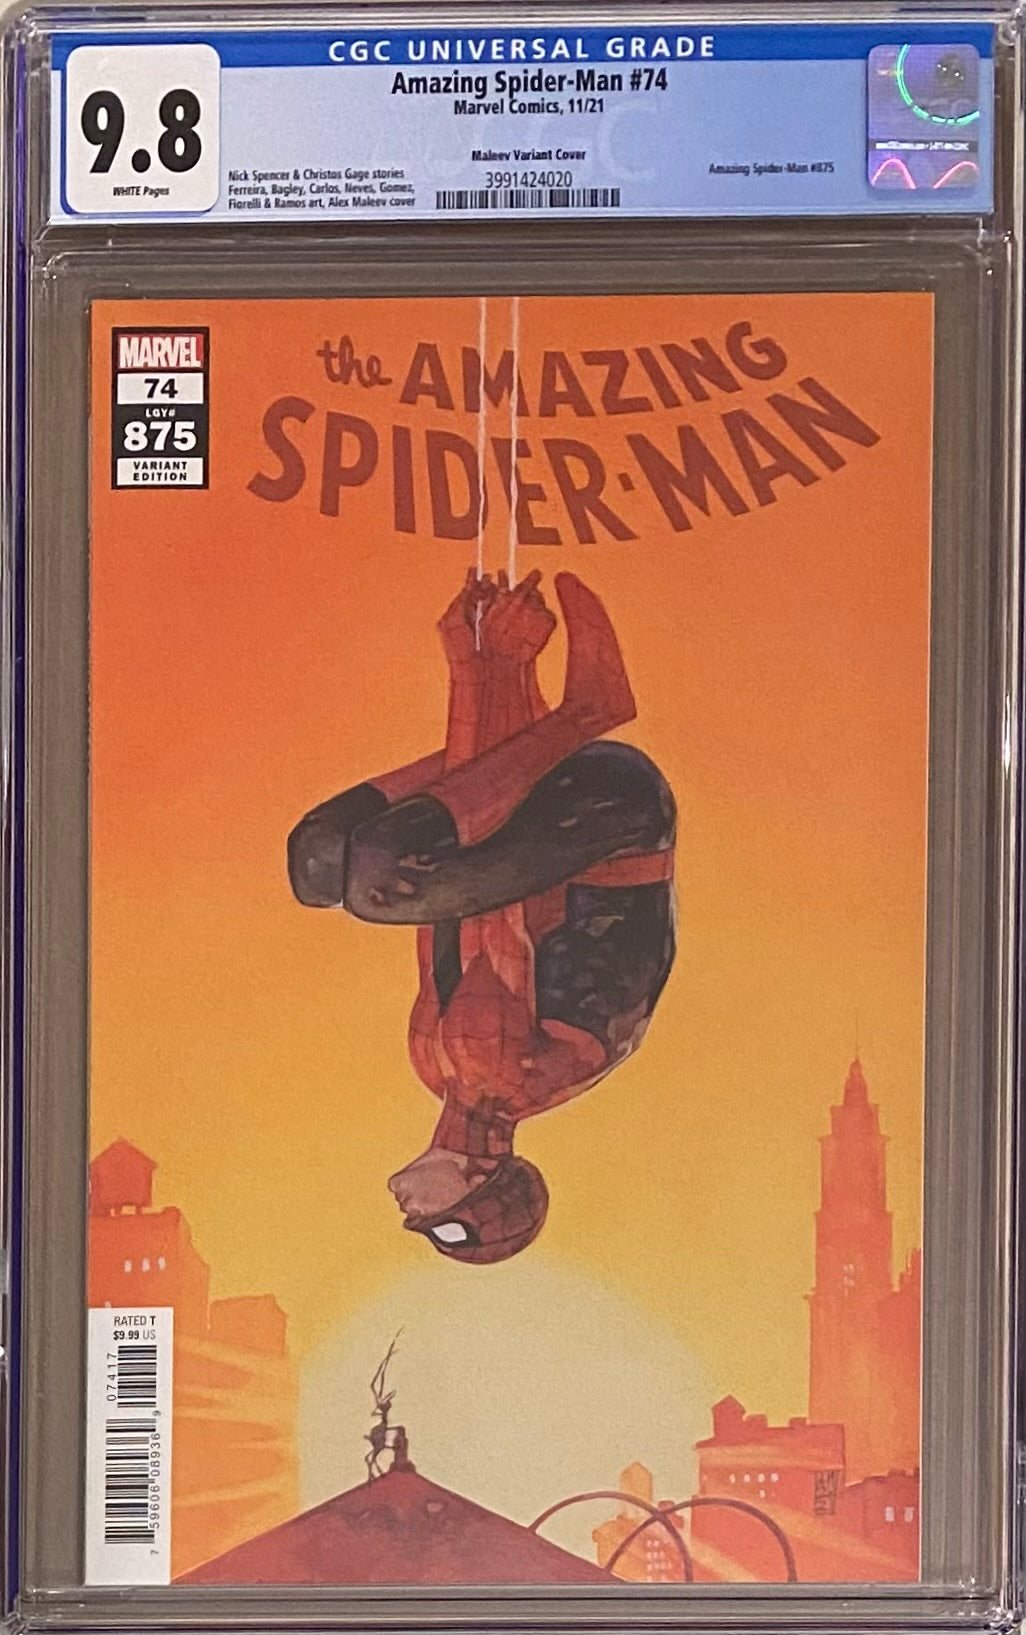 Amazing Spider-Man #74 (#875) Maleev Variant CGC 9.8